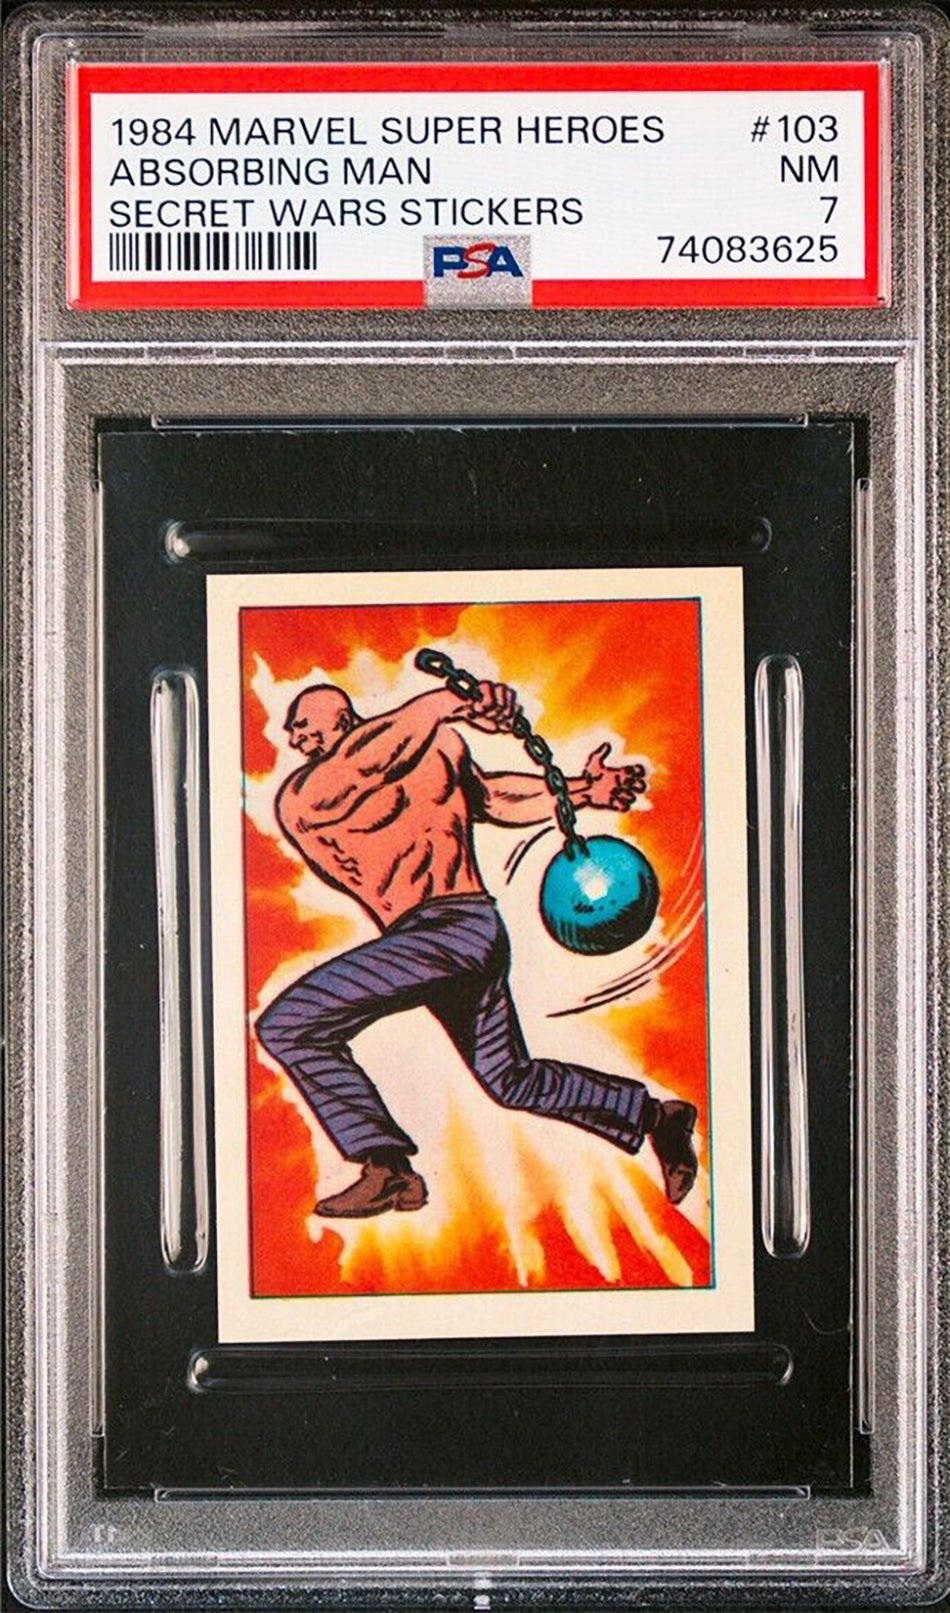 ABSORBING MAN PSA 7 1984 Marvel Super Heroes Secret Wars Sticker #103 Marvel Graded Cards Sticker - Hobby Gems